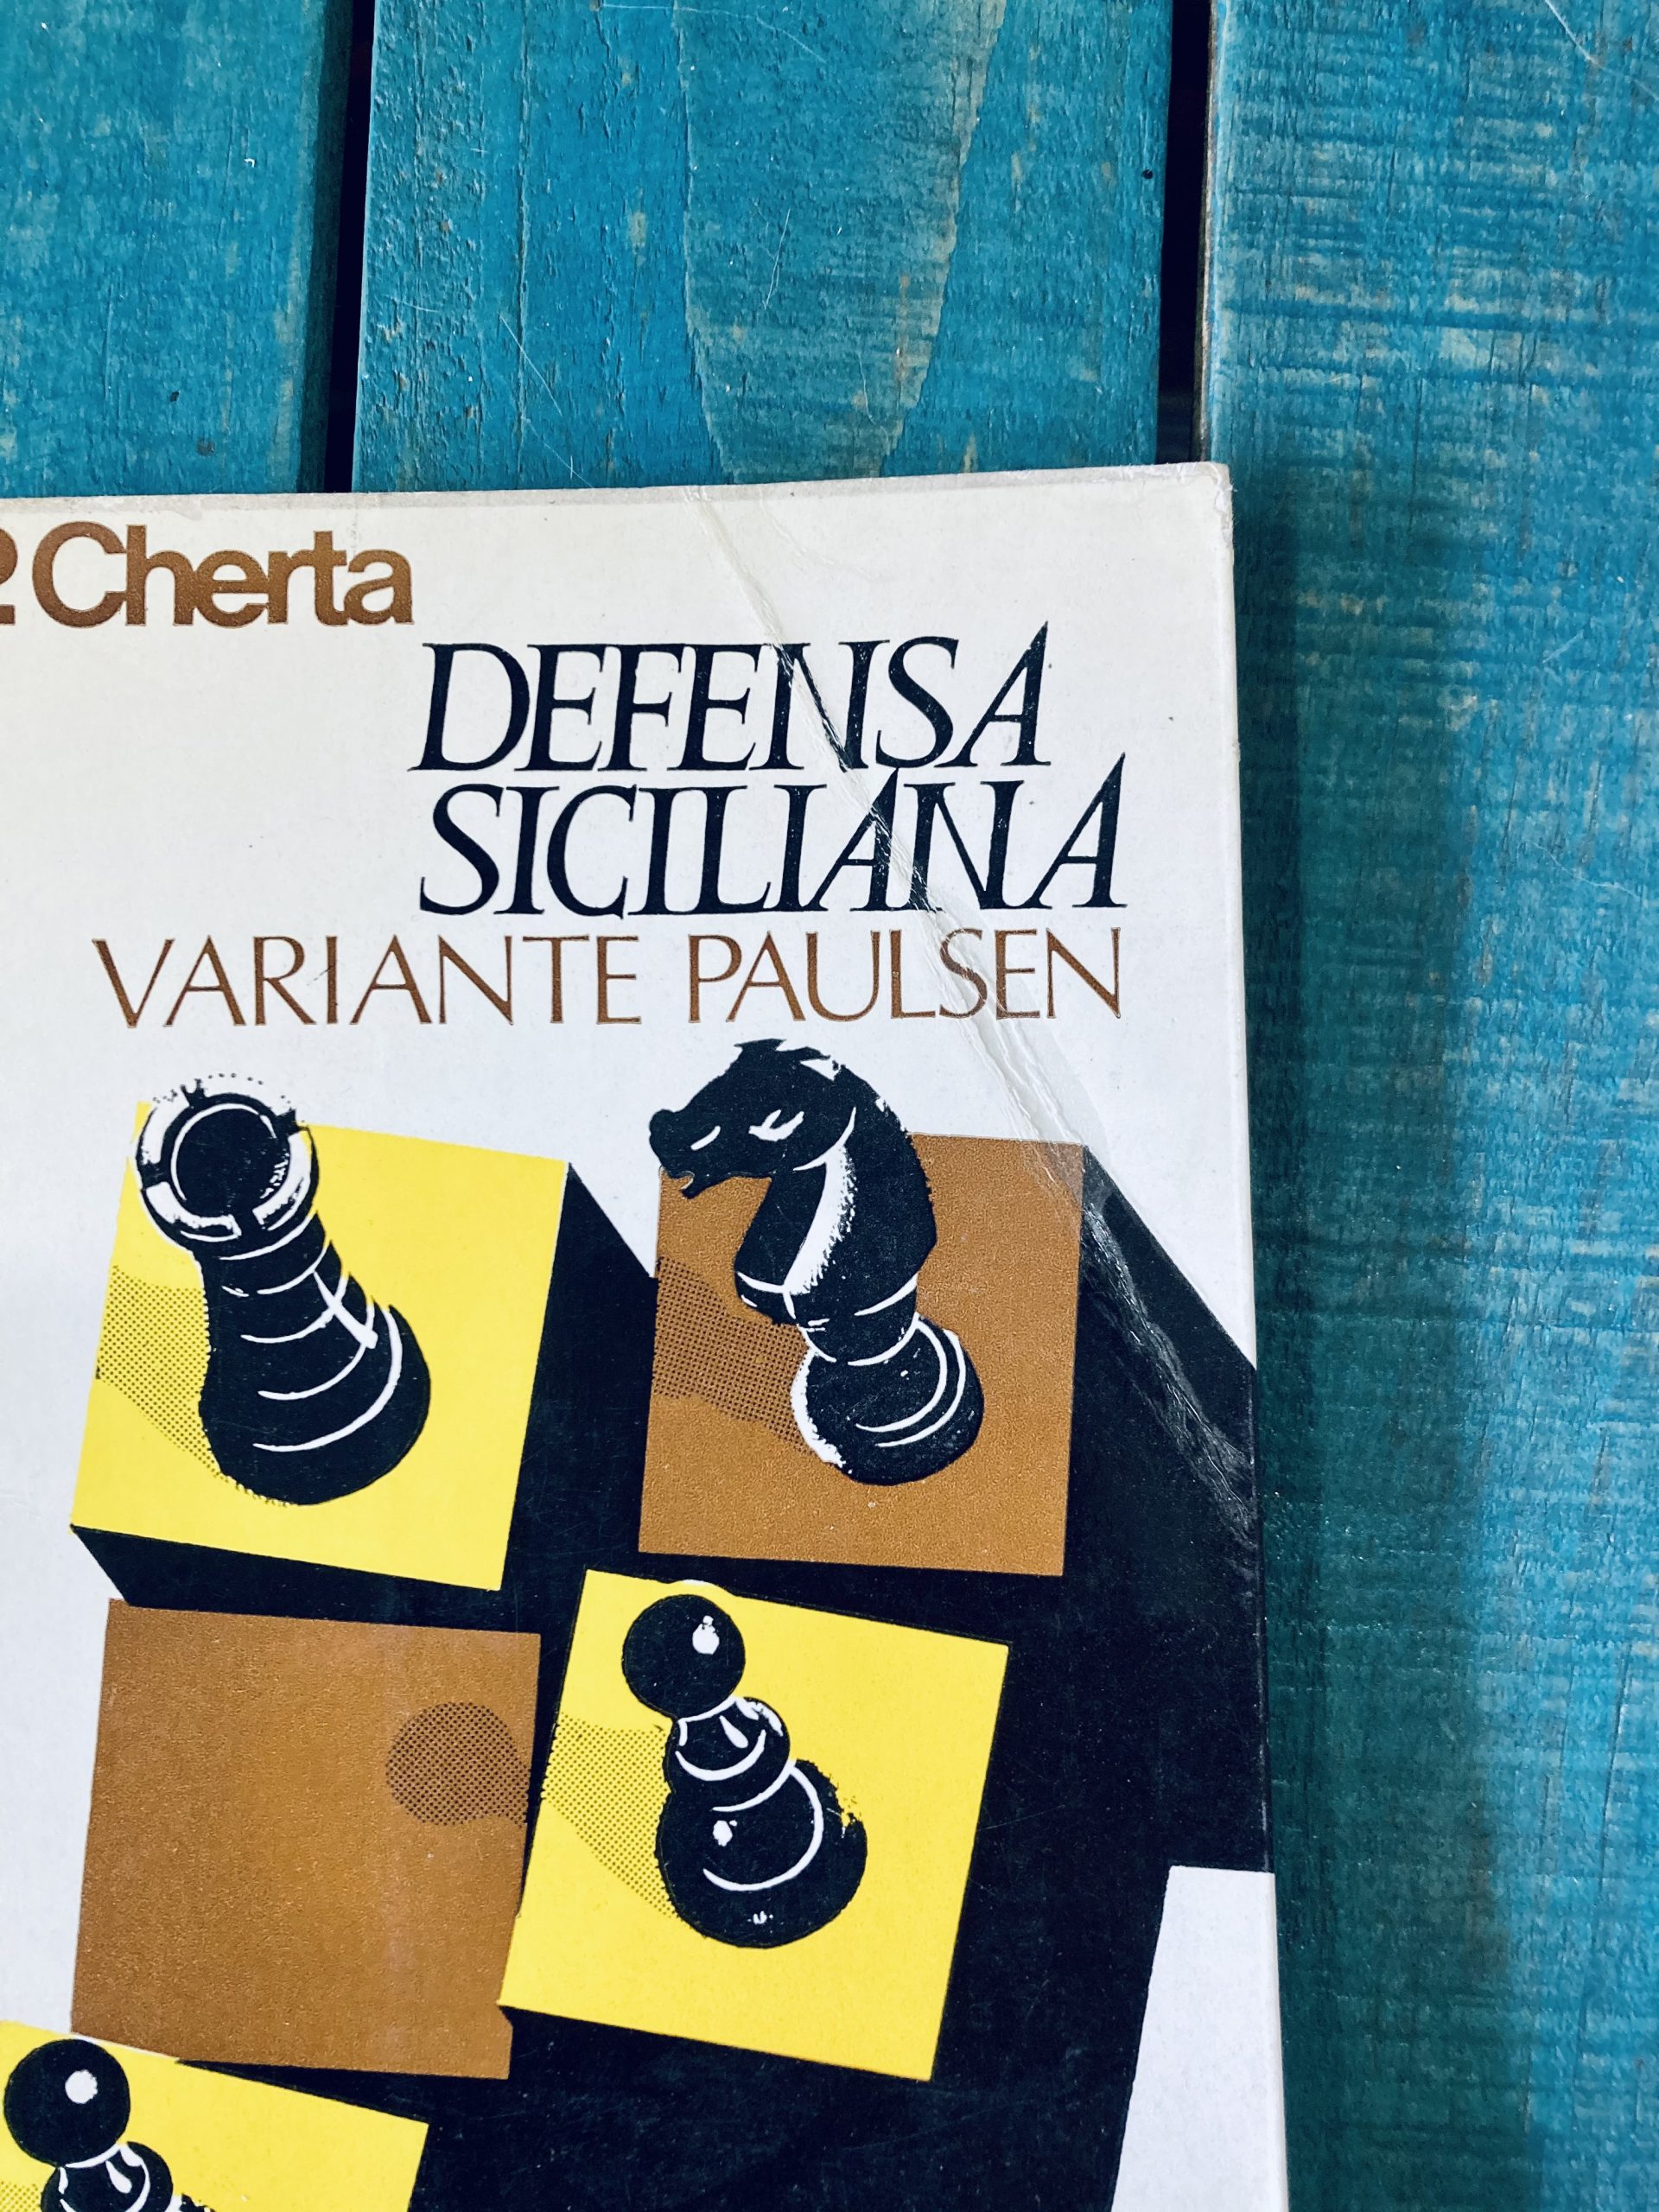 Defensa Siciliana Variante Najdorf Escrito Por Pedro Cherta PDF